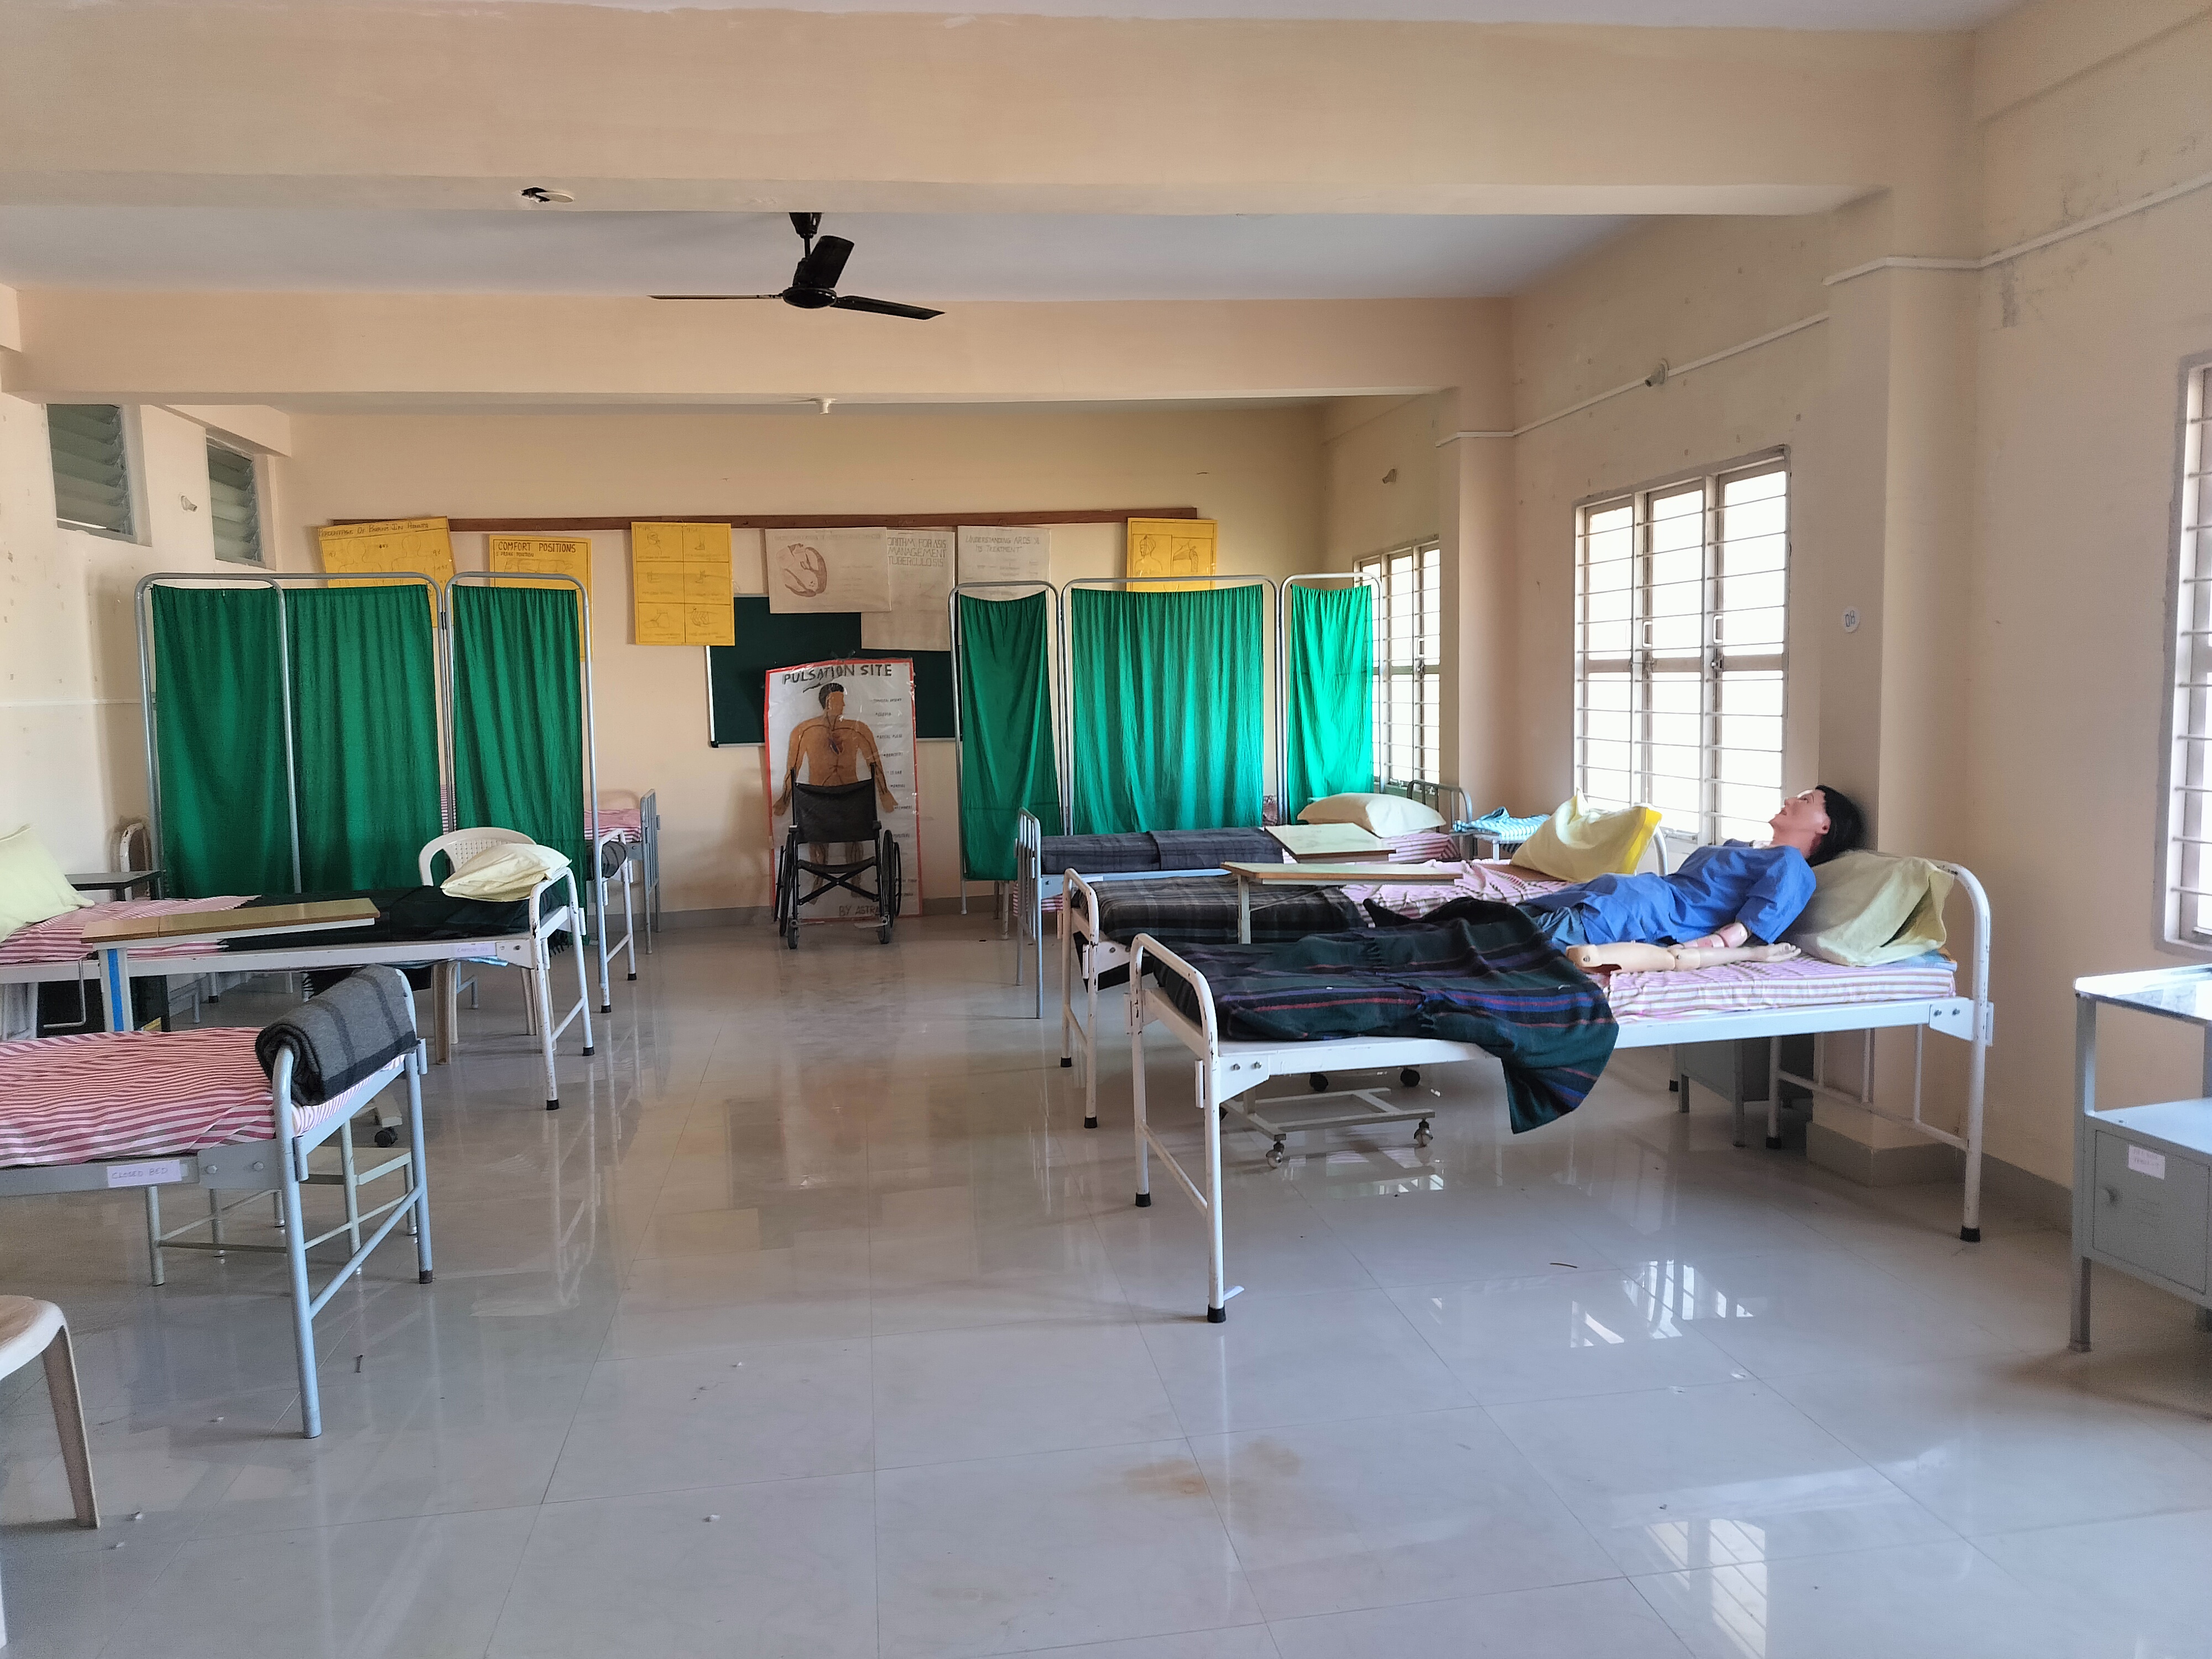 Ashwini Nursing College